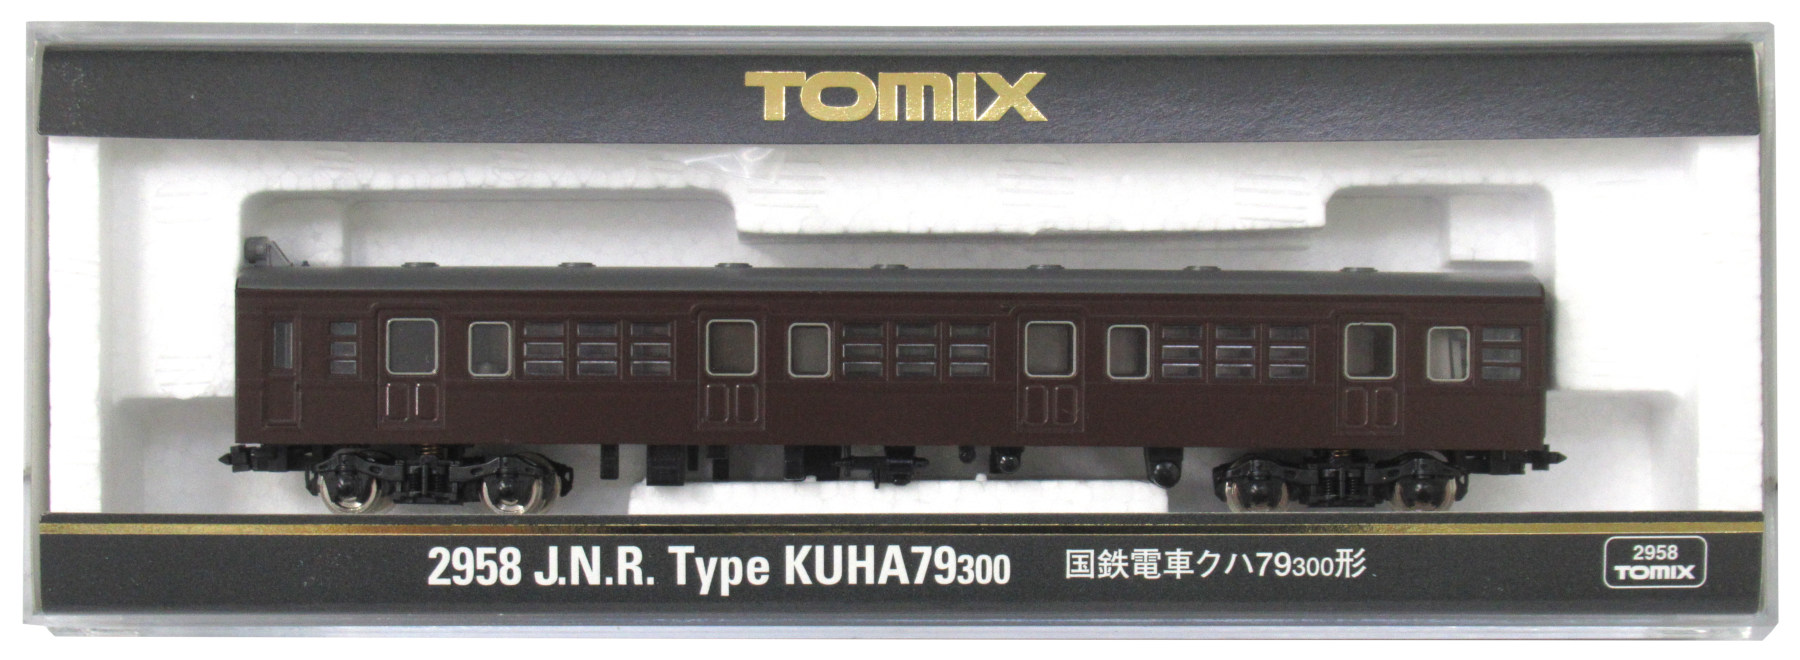 TOMIX 2958 J.N.R. Type KUHA79 300 国鉄電車 クハ 79 300形 Nゲージ 鉄道模型  W8978457